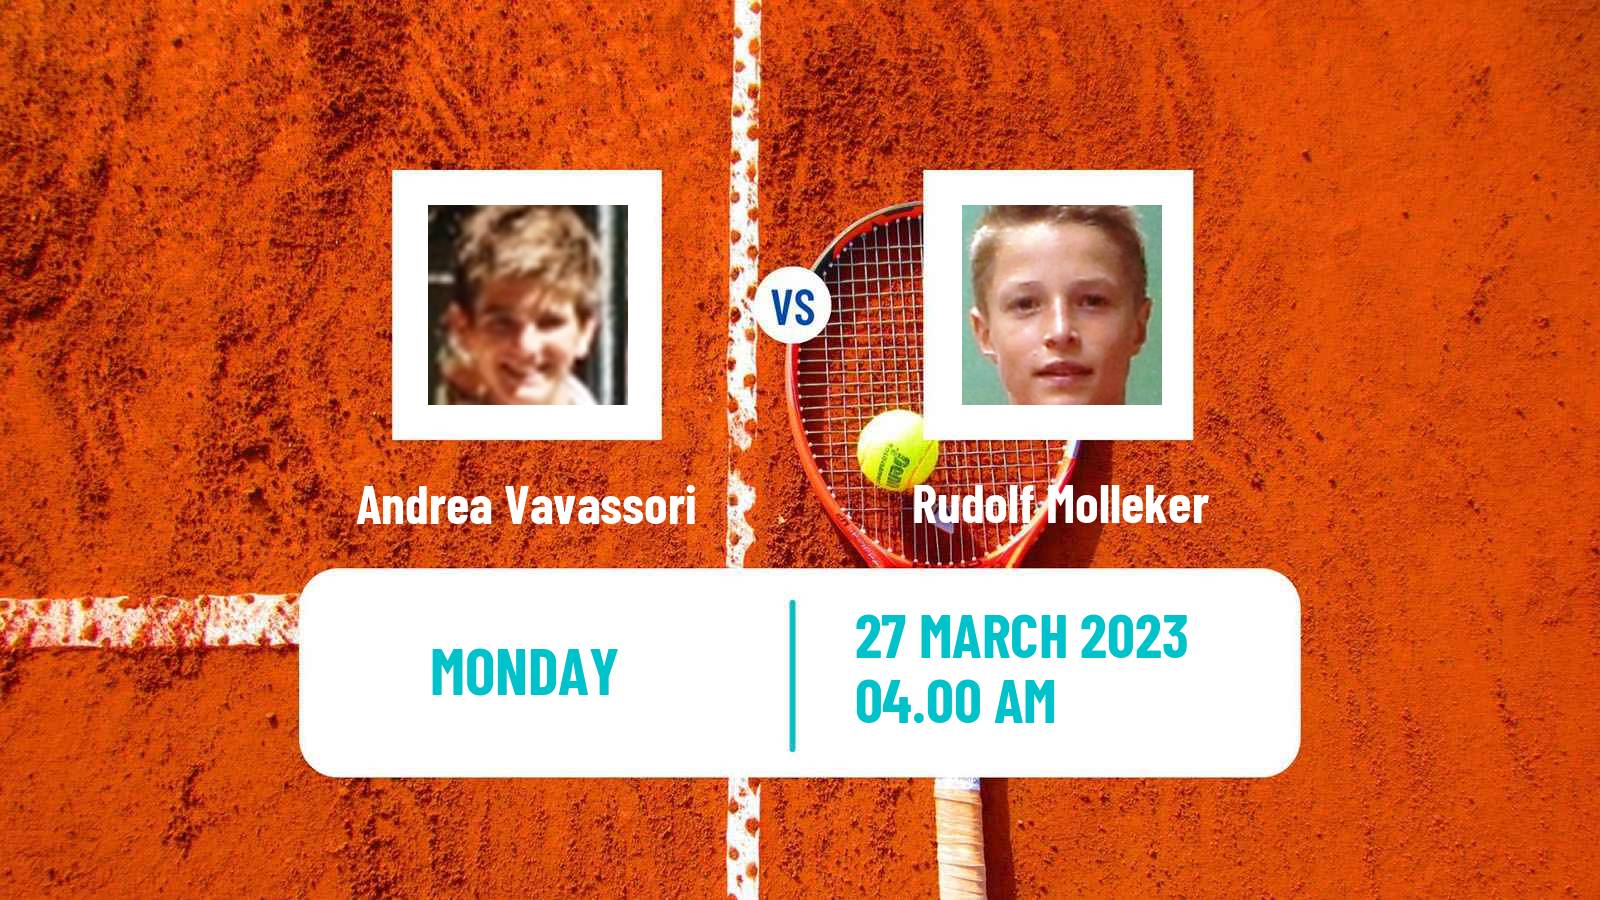 Tennis ATP Challenger Andrea Vavassori - Rudolf Molleker